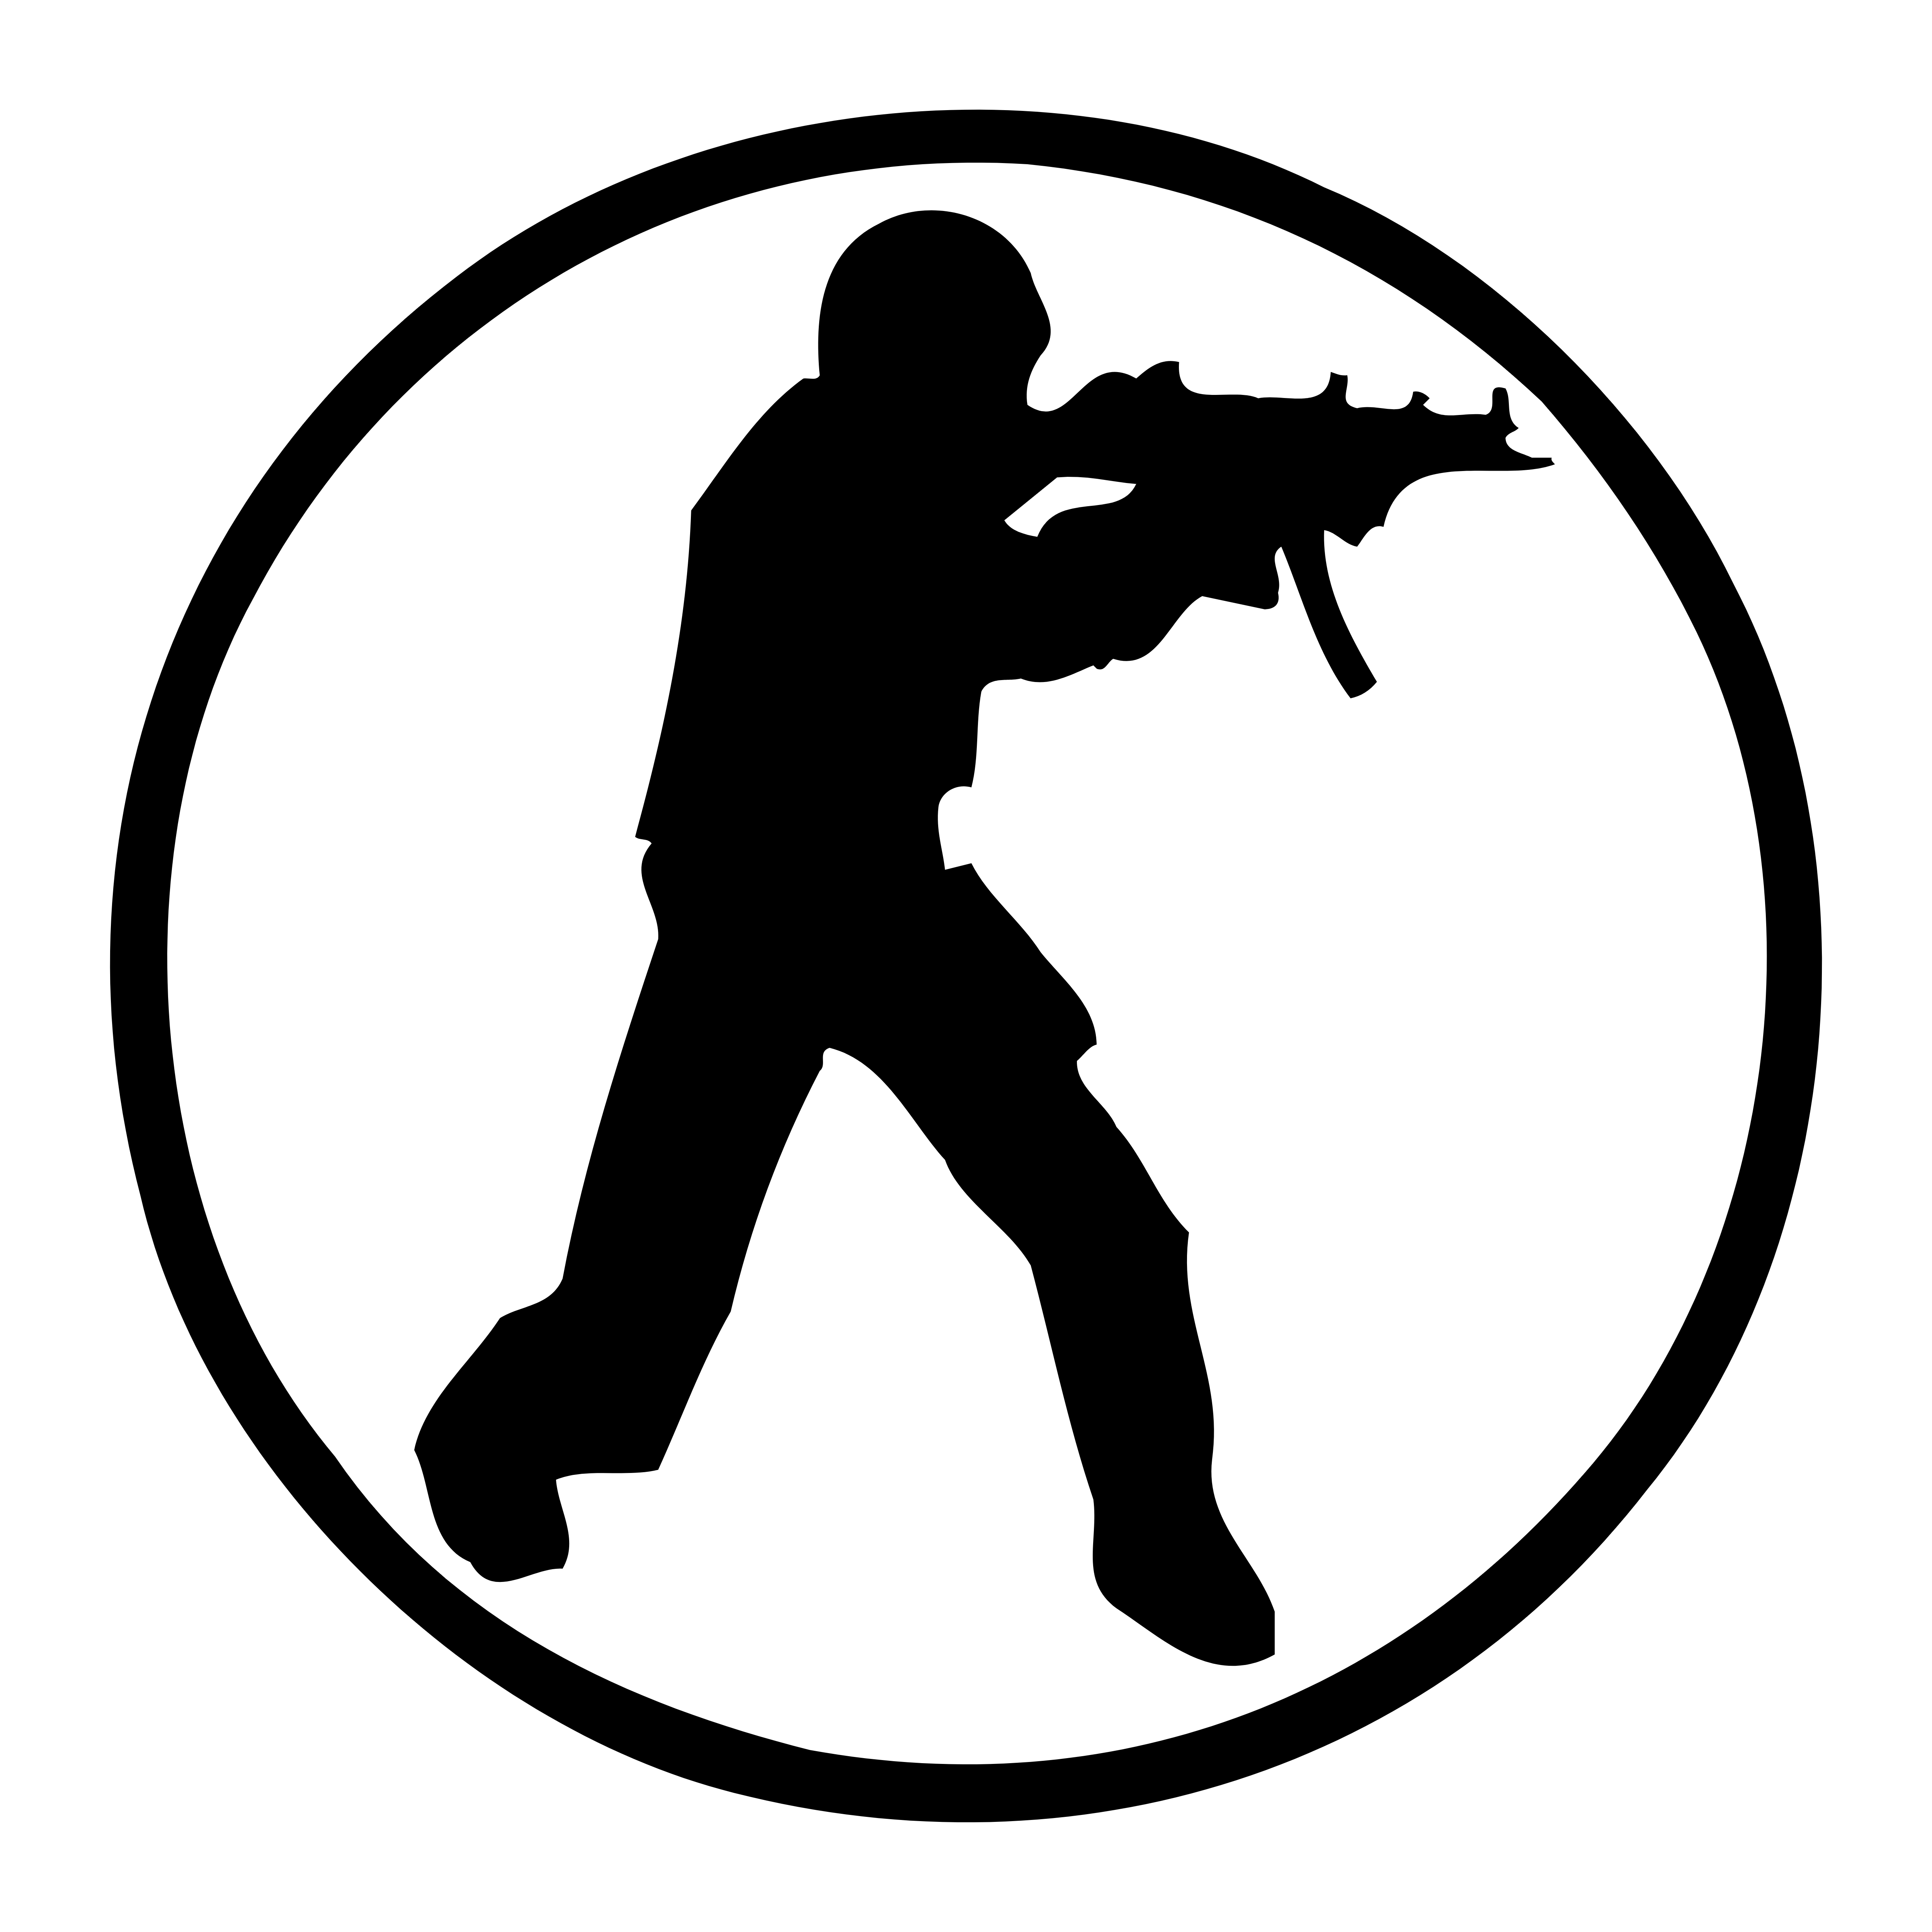 counter strike logo design